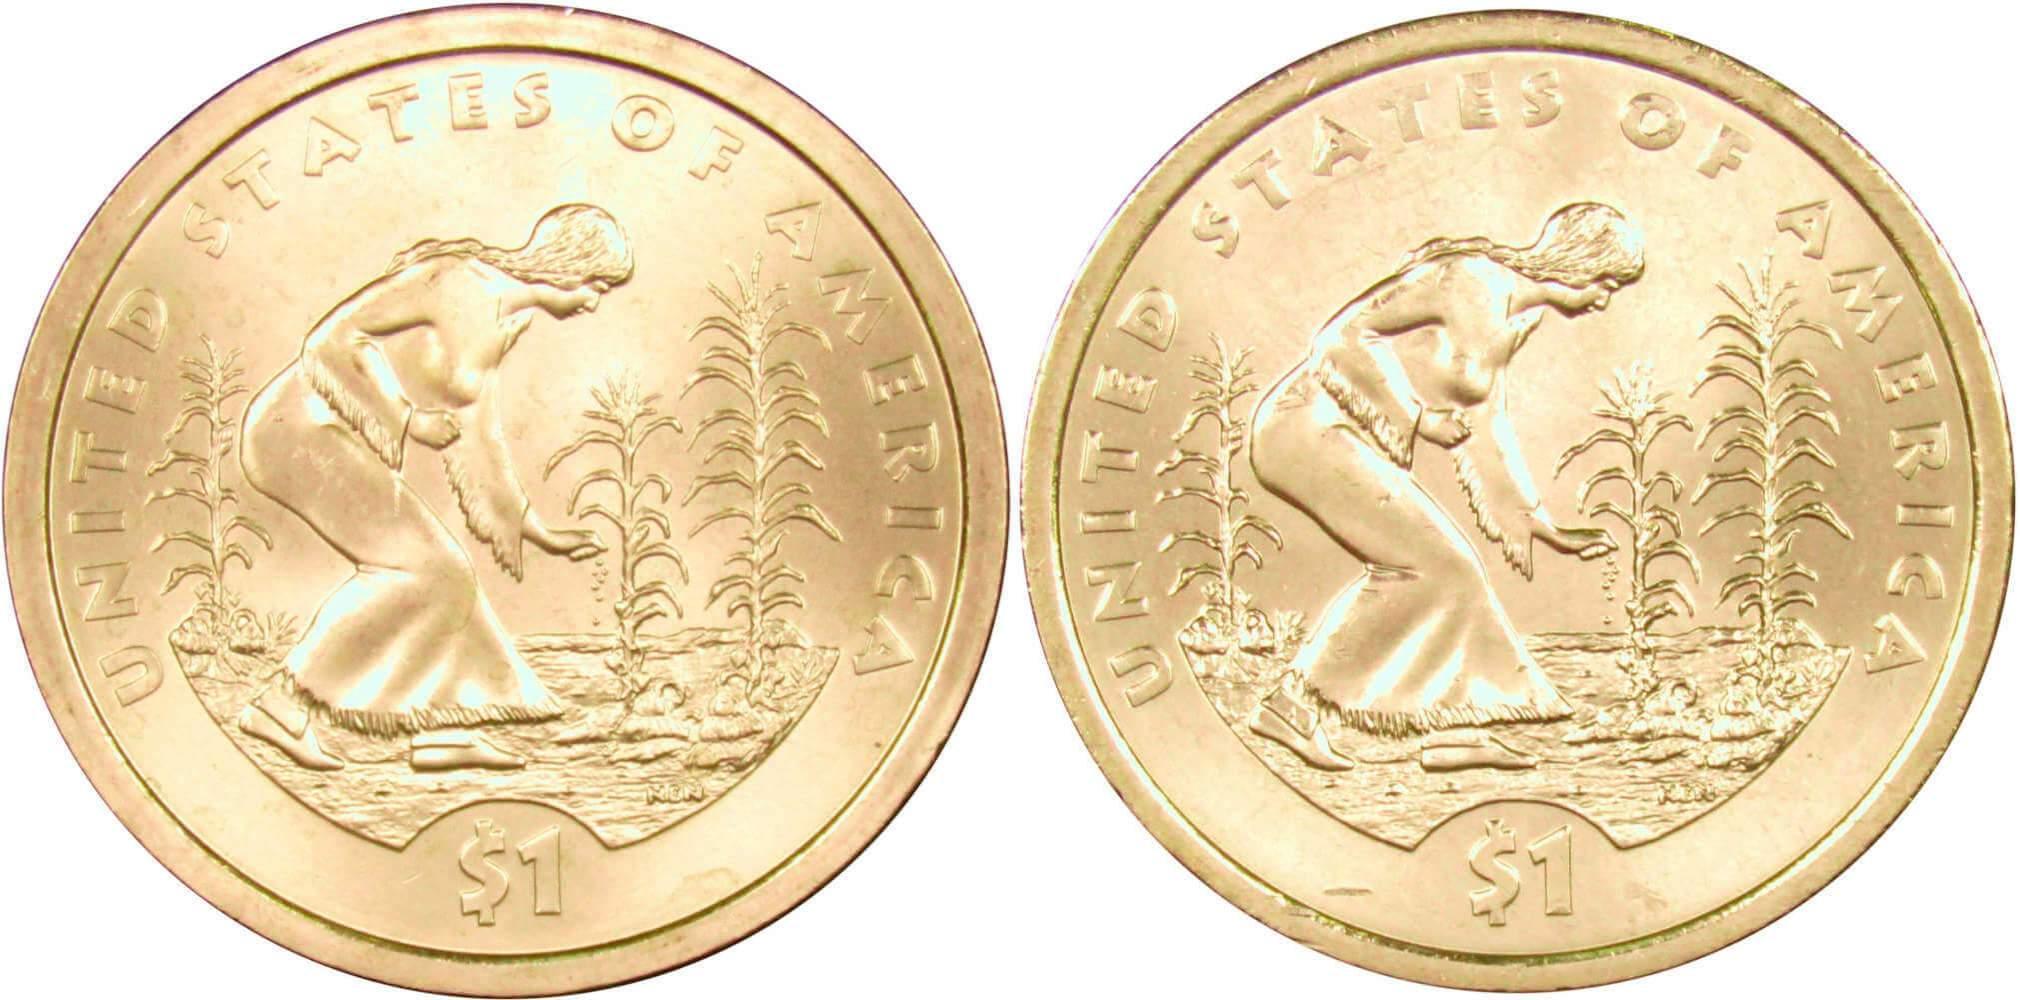 2009 P&D Three Sisters Native American Dollar 2 Coin Set BU Uncirculated $1